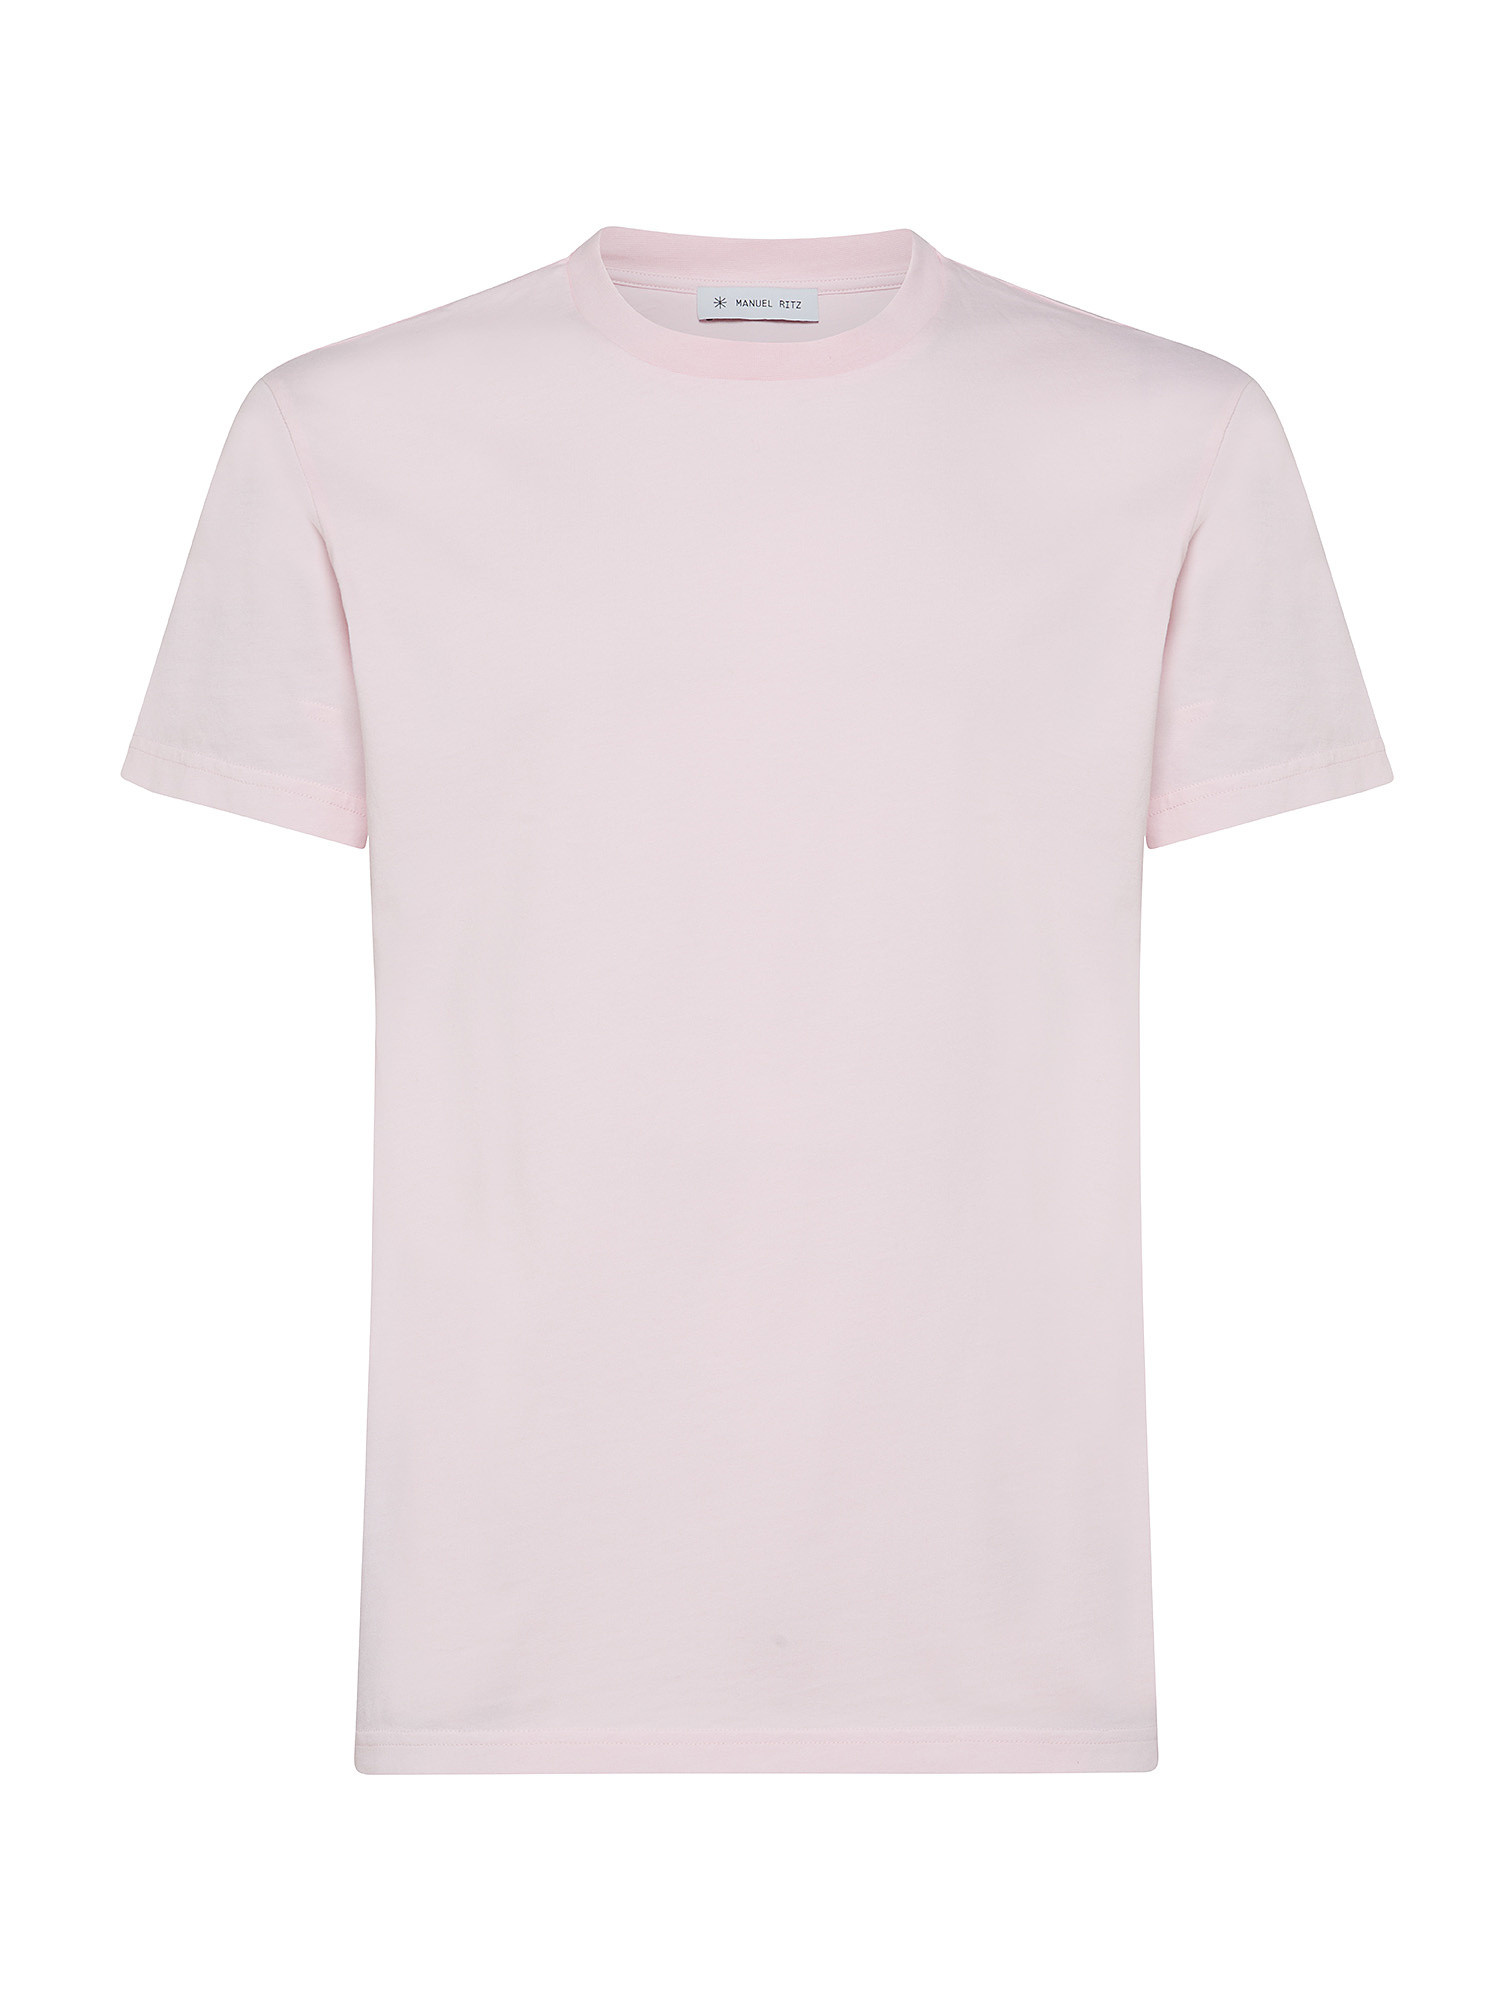 Manuel Ritz - Cotton T-shirt, Pink, large image number 0